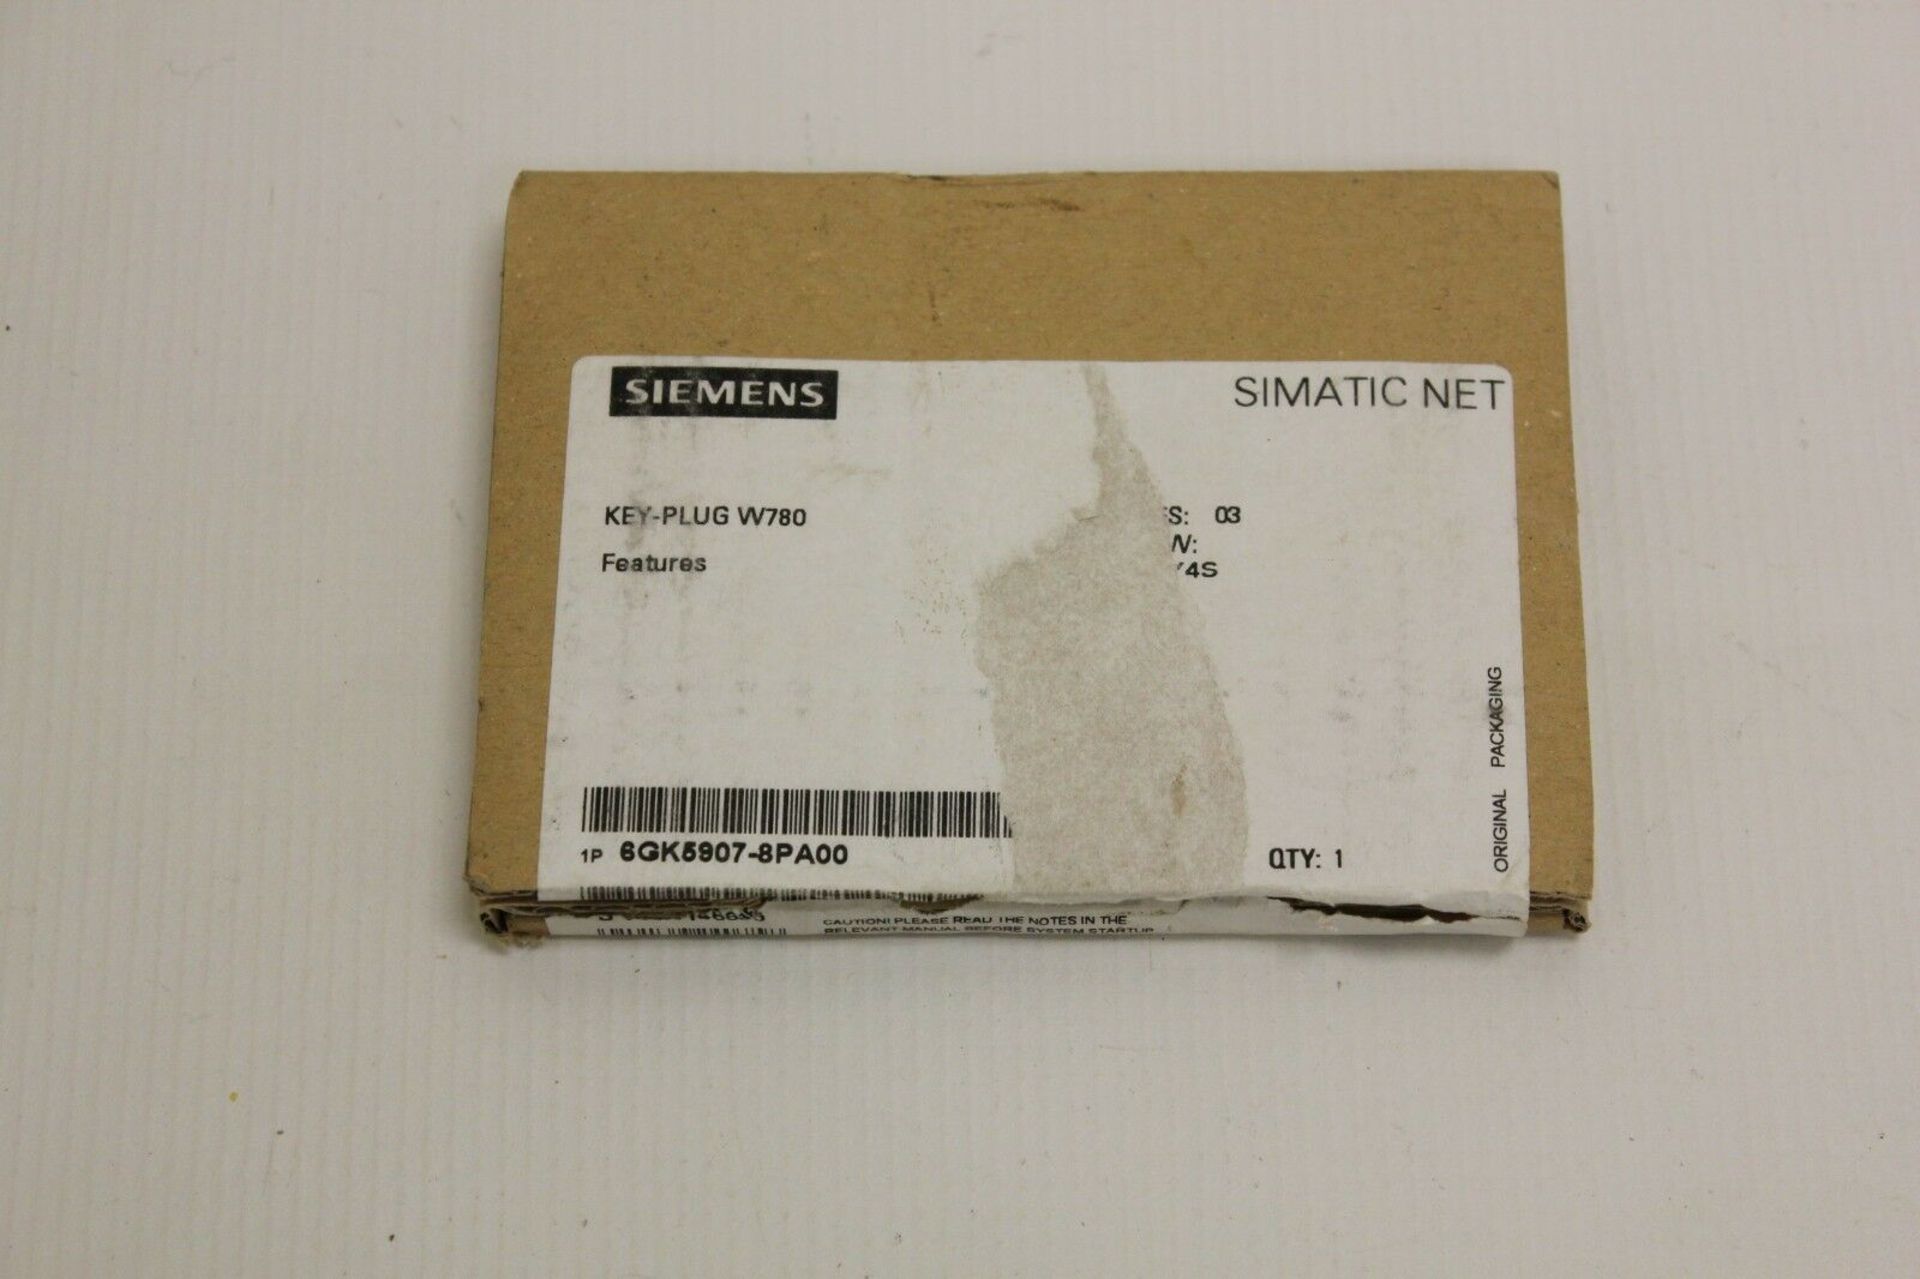 New SIEMENS Simatic Net Key-Plug W780 6GK5907-8PA00